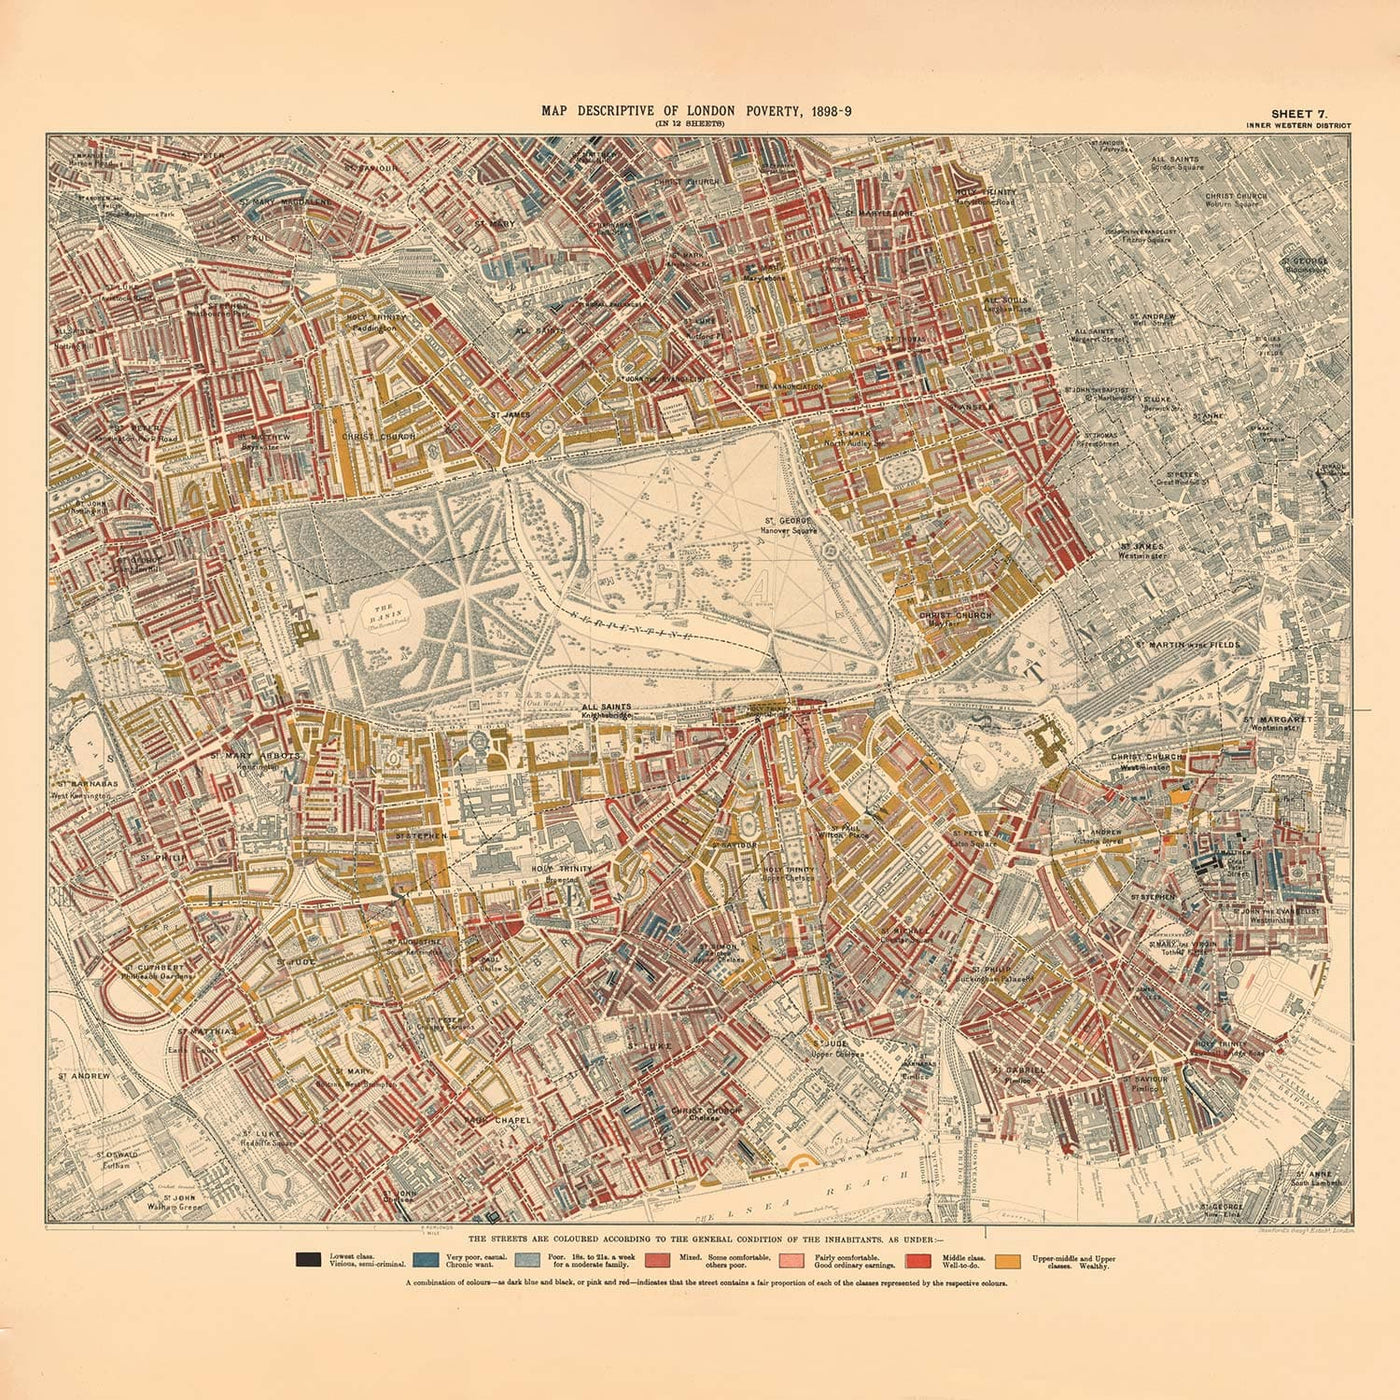 Karte der Londoner Armut 1898-9, Inner Western District, von Charles Booth - Westminster, Hyde Park, Kensington, Mayfair - W1, W2, W11, W8, SW7, SW3, SW1